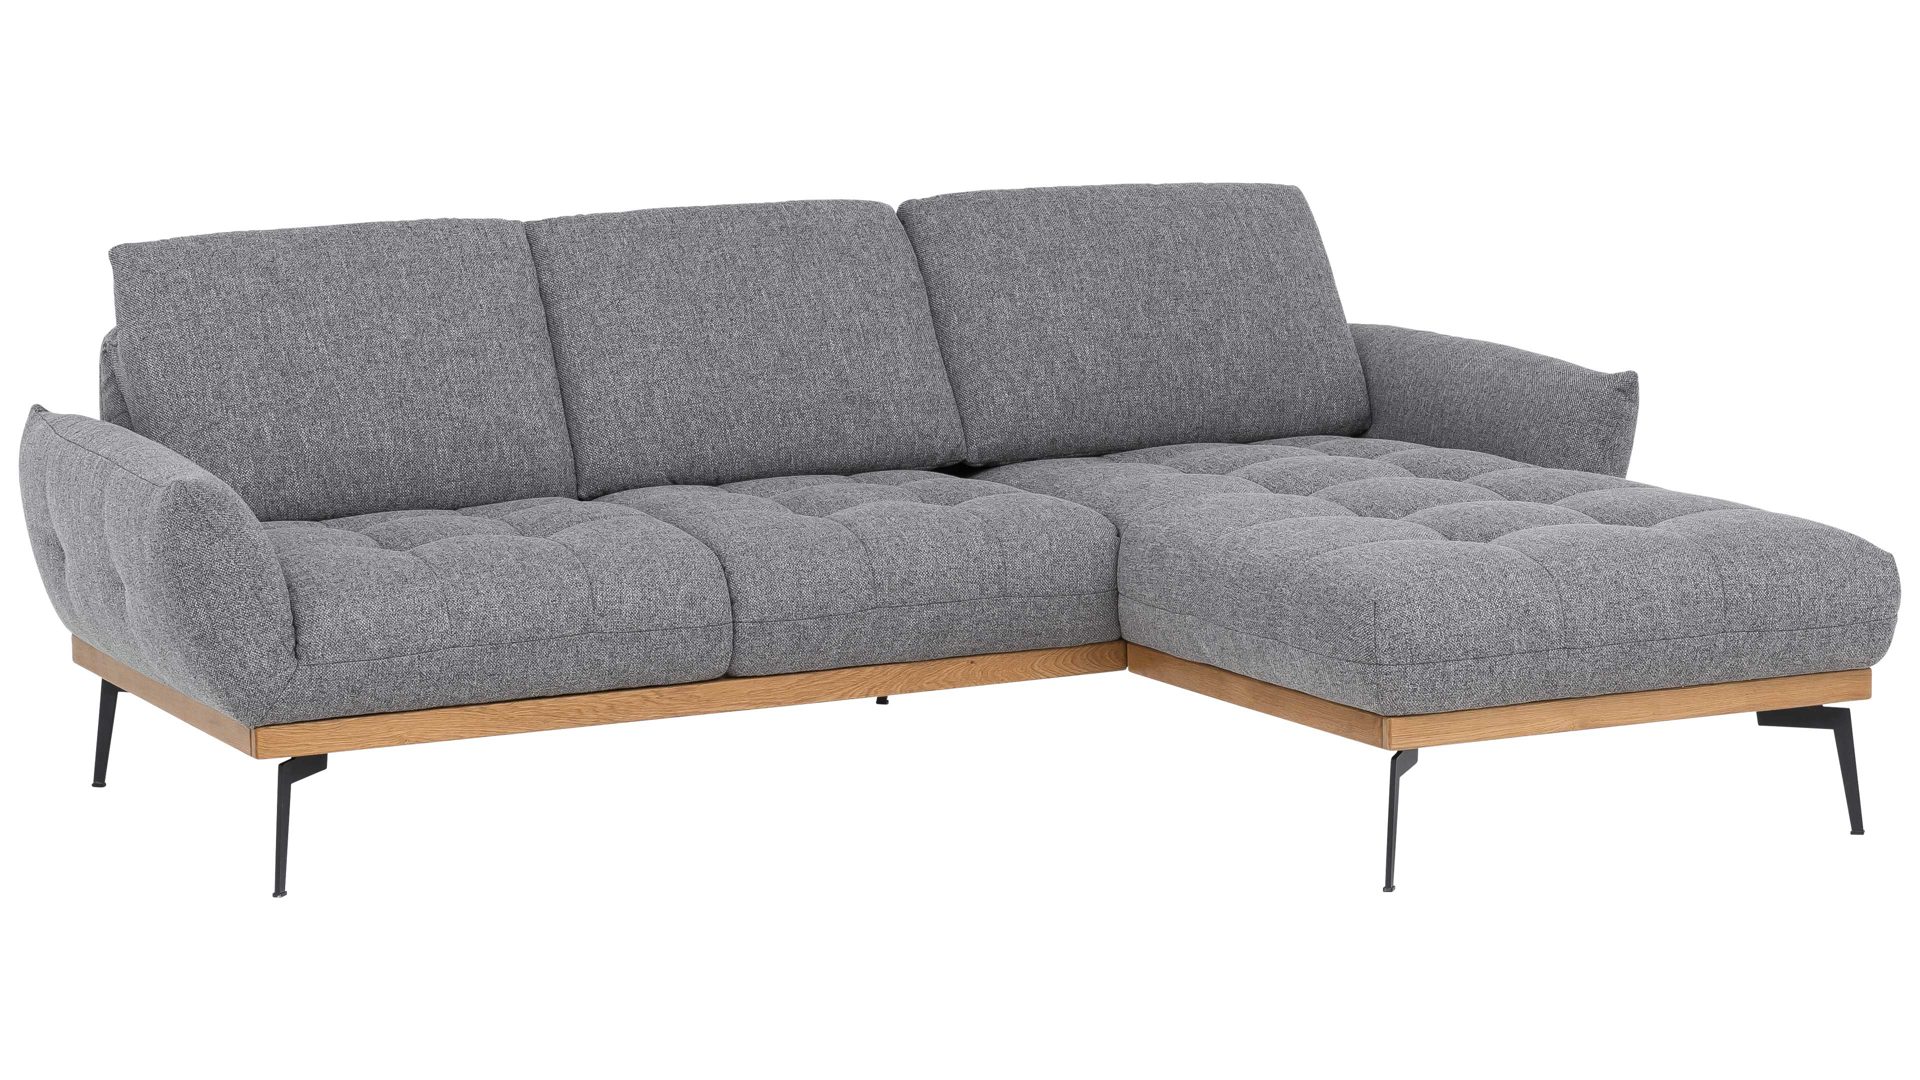 Ecksofa Exxpo sofa fashion aus Stoff in Grau Ecksofa Pablo grauer Stoffbezug Tessero 03 - Stellfläche ca. 245 x 185 cm